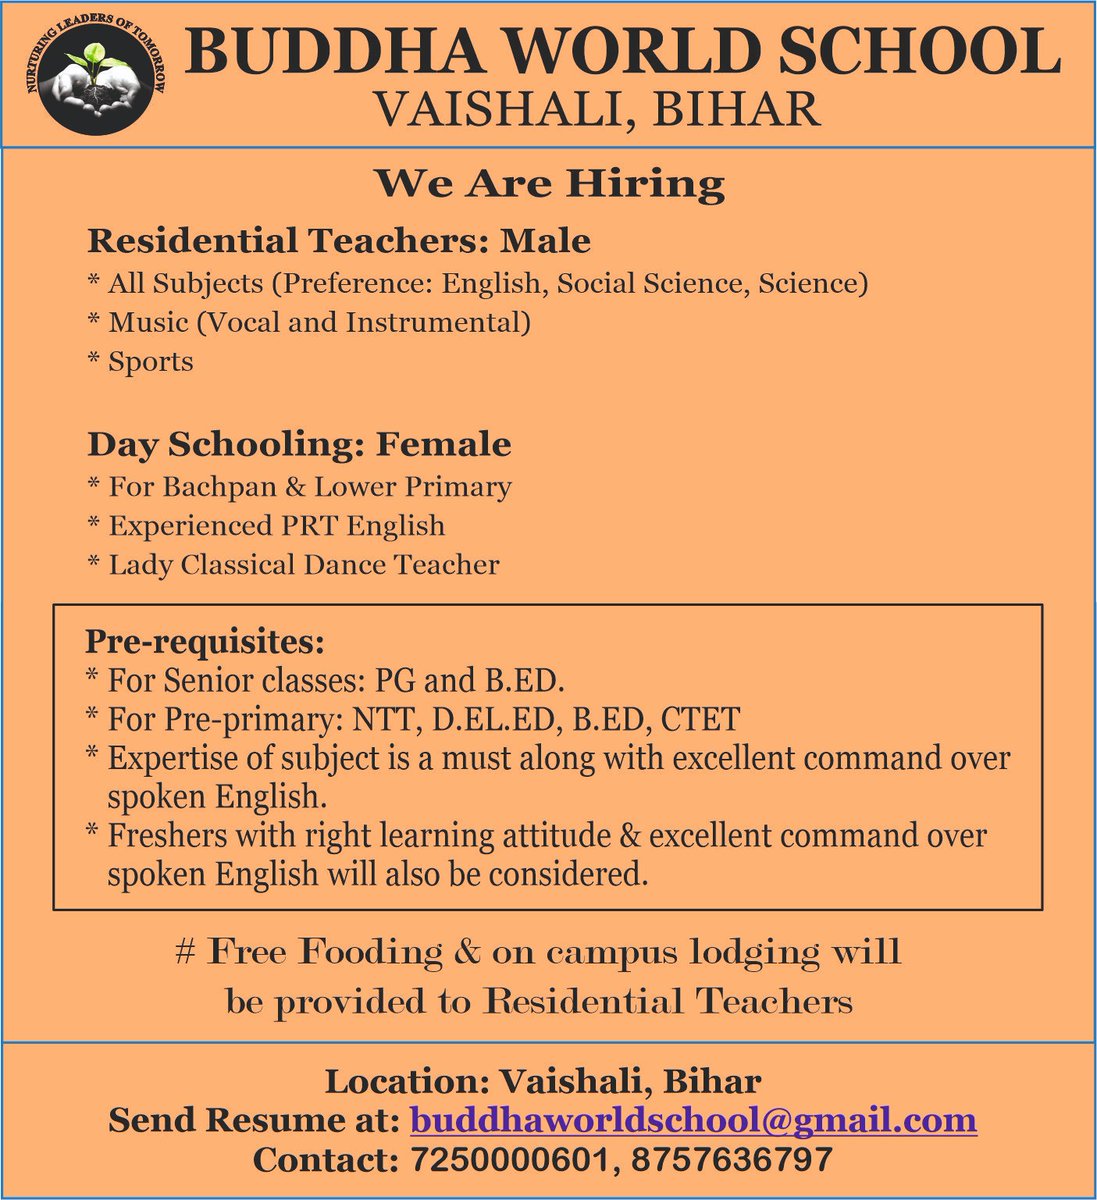 We are hiring teachers for PRT/TGT/PGT/PET at Buddha World School, Vaishali, Bihar. For more details: 📞 7250000601, 8757636797, Drop your resume: buddhaworldschool@gmail.com Website: wwwbuddhaworldschool.com #HiringNow #TEACHers #school #hiring @sarikamalhotra2 @Krish_Vaishali